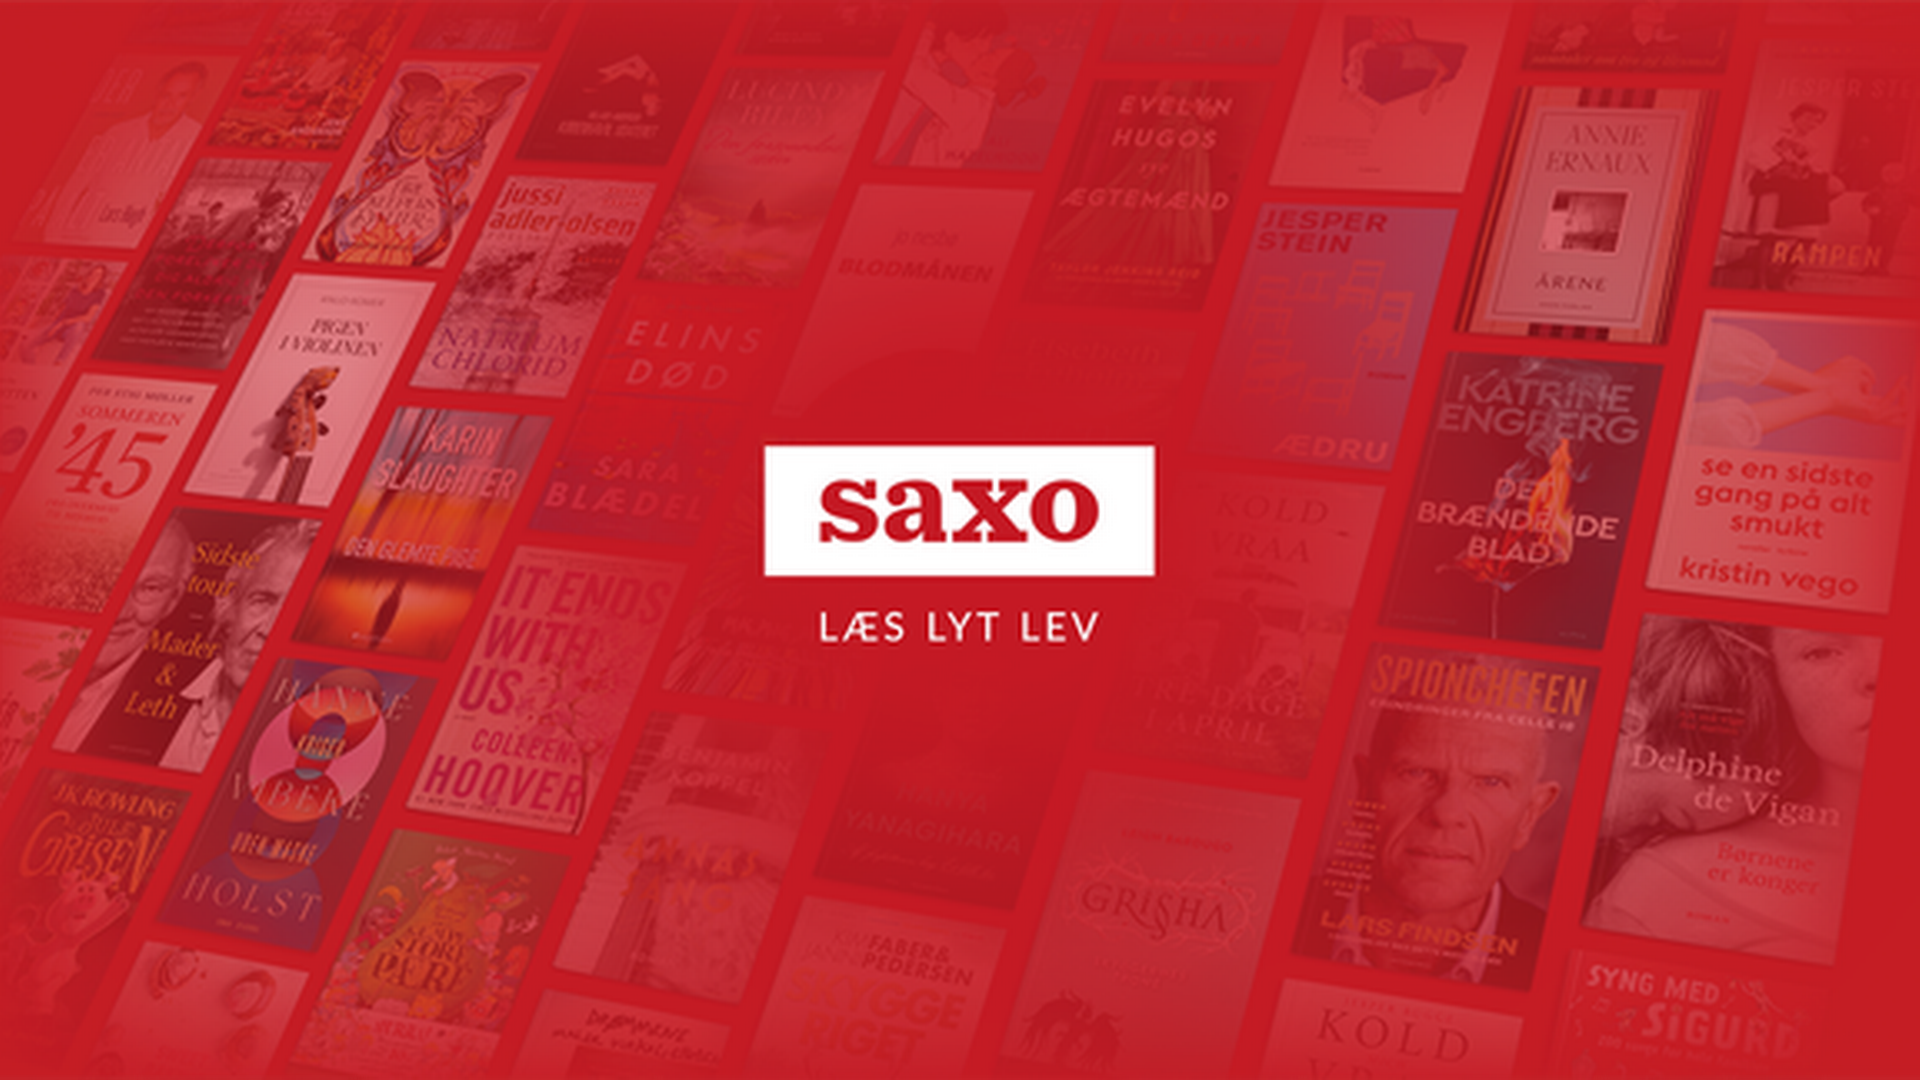 Saxo er blandt de førende boghandlere i Danmark og opererer online.